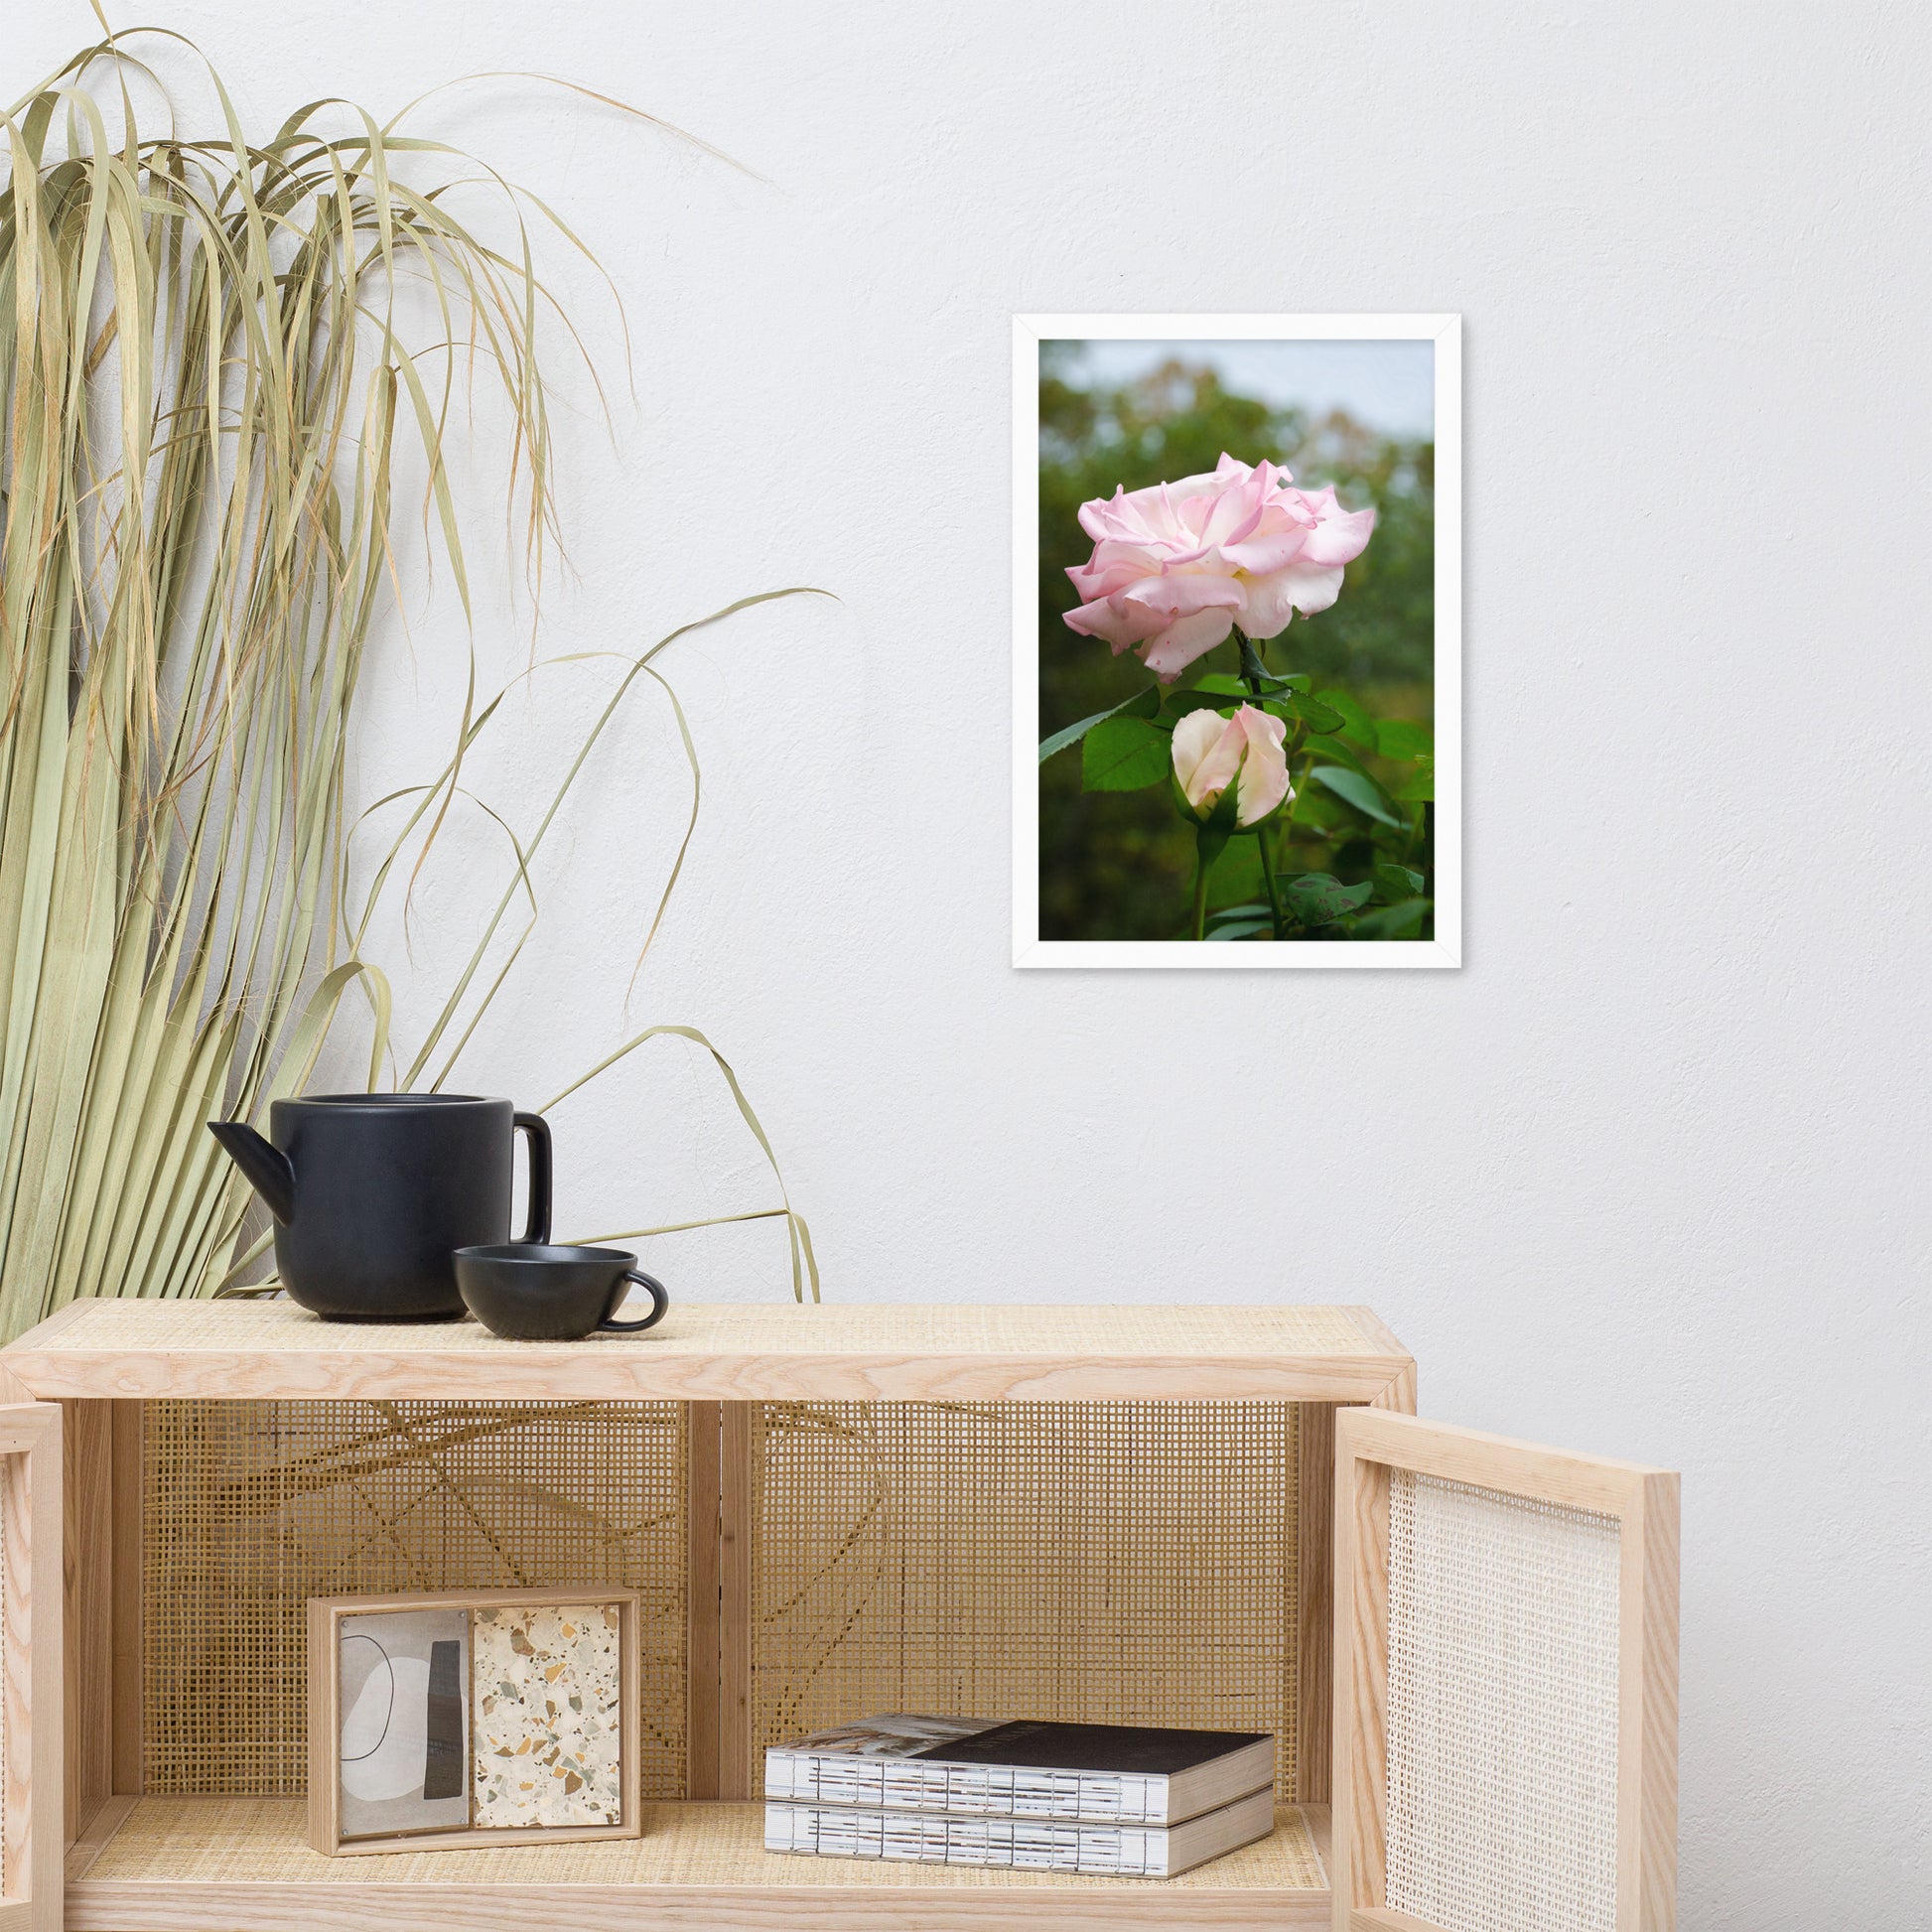 Framed Floral Art Prints: Admiration - Pink Rose Floral / Botanical / Nature Photo Framed Wall Art Print - Artwork - Wall Decor - Home Decor